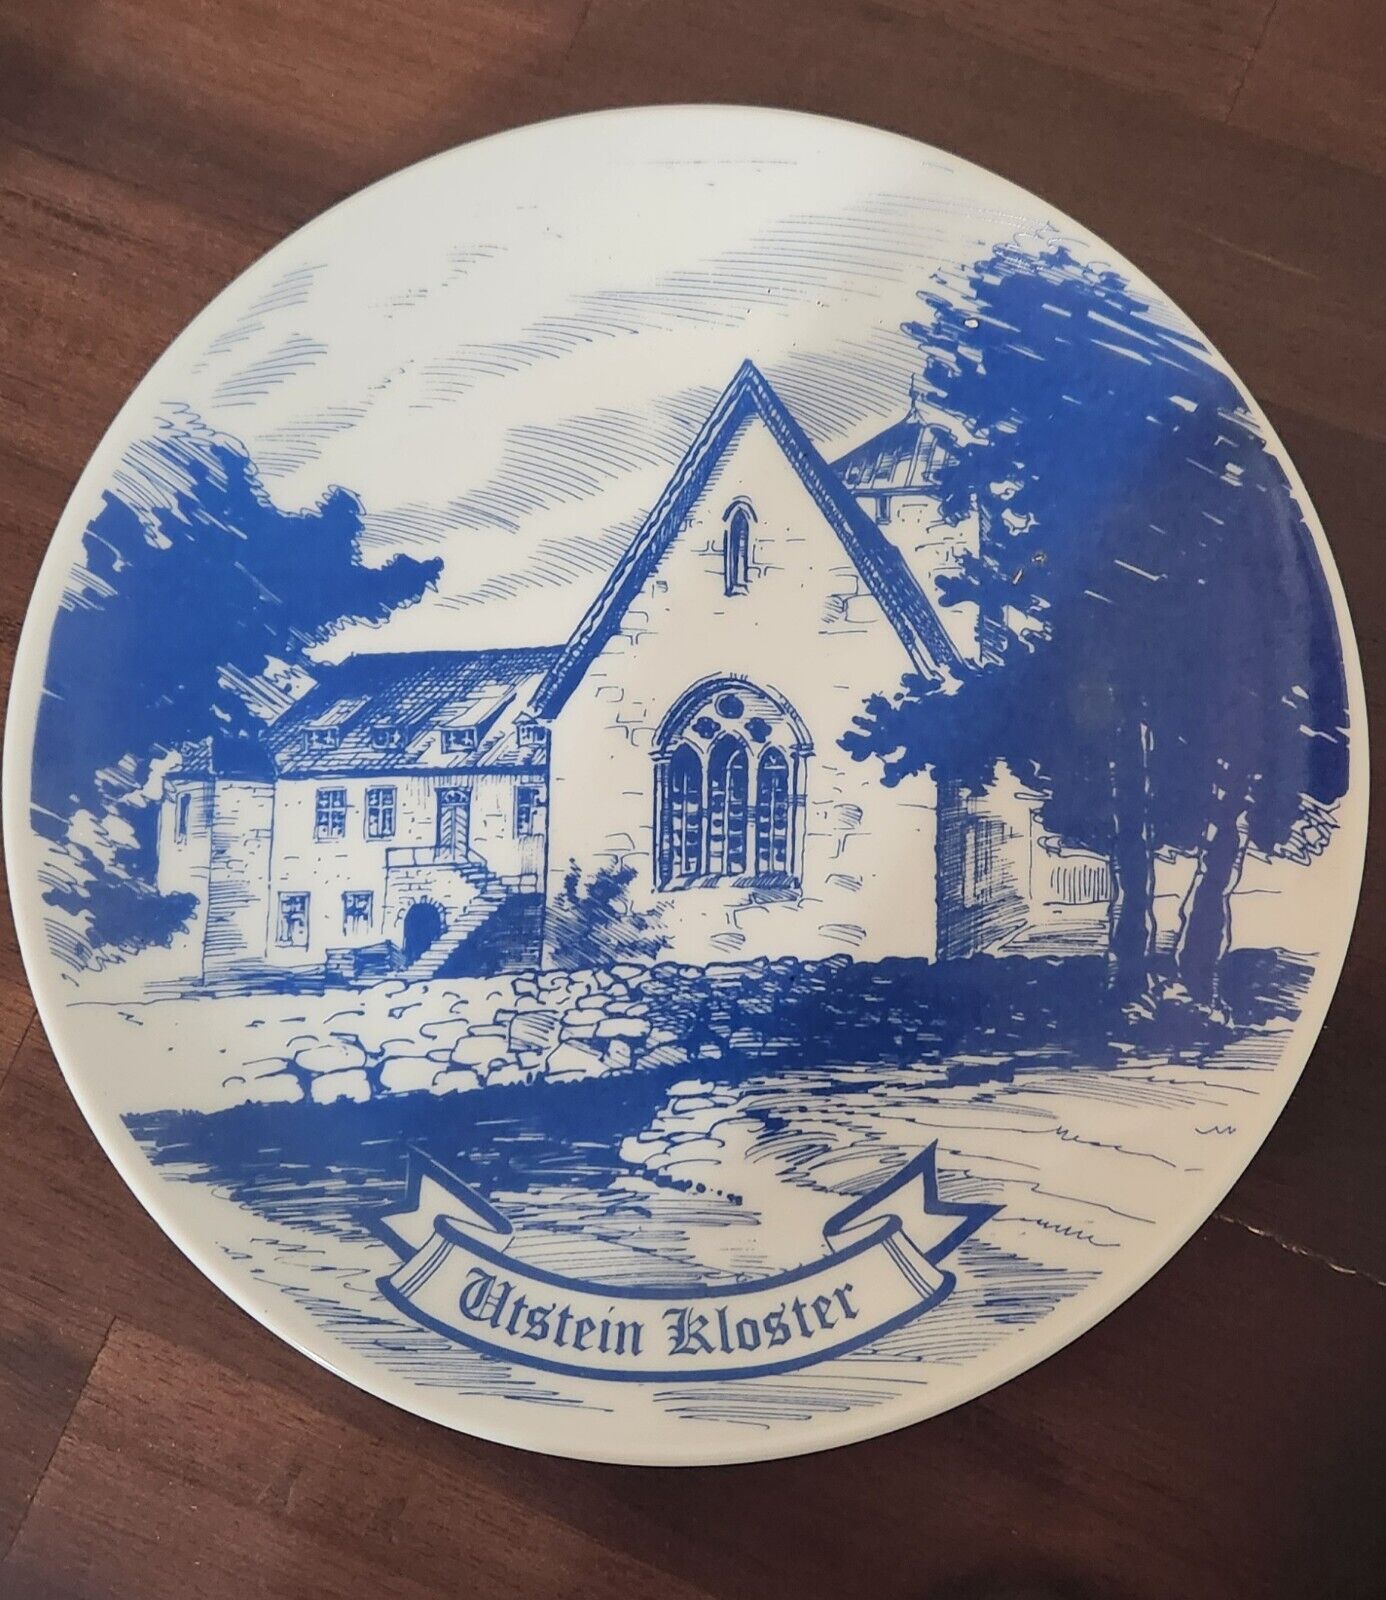 *Vintage Blue Plate* Dansk Norsk Porselen A.S. Norge Utstein Kloster abbey